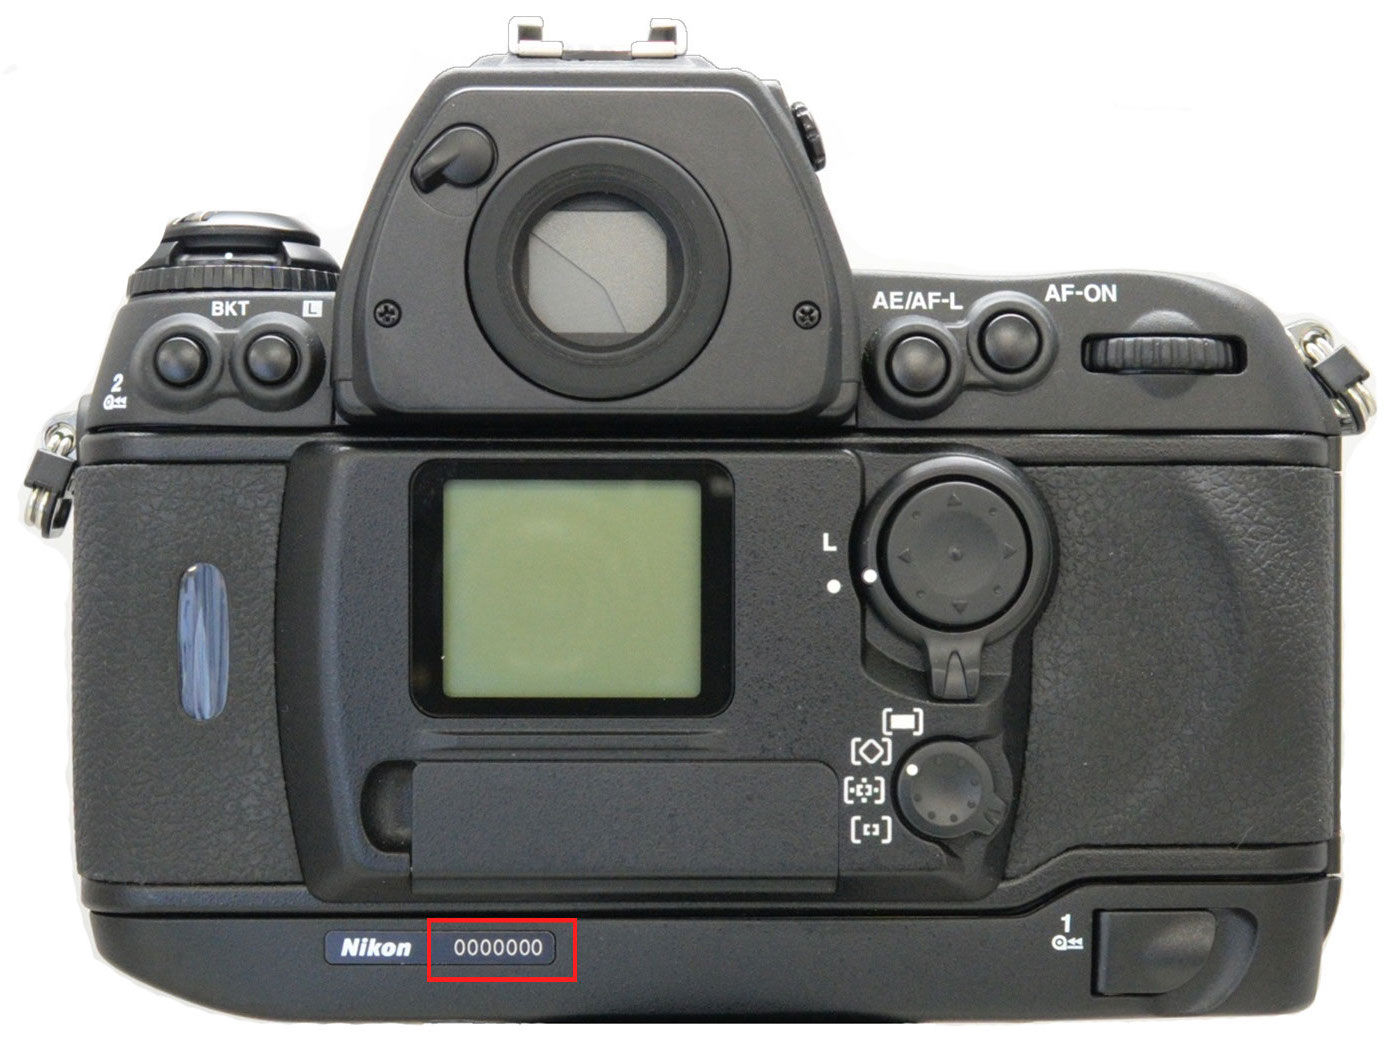 Partial Nikon F6 recall issued in Japan - Nikon Rumors